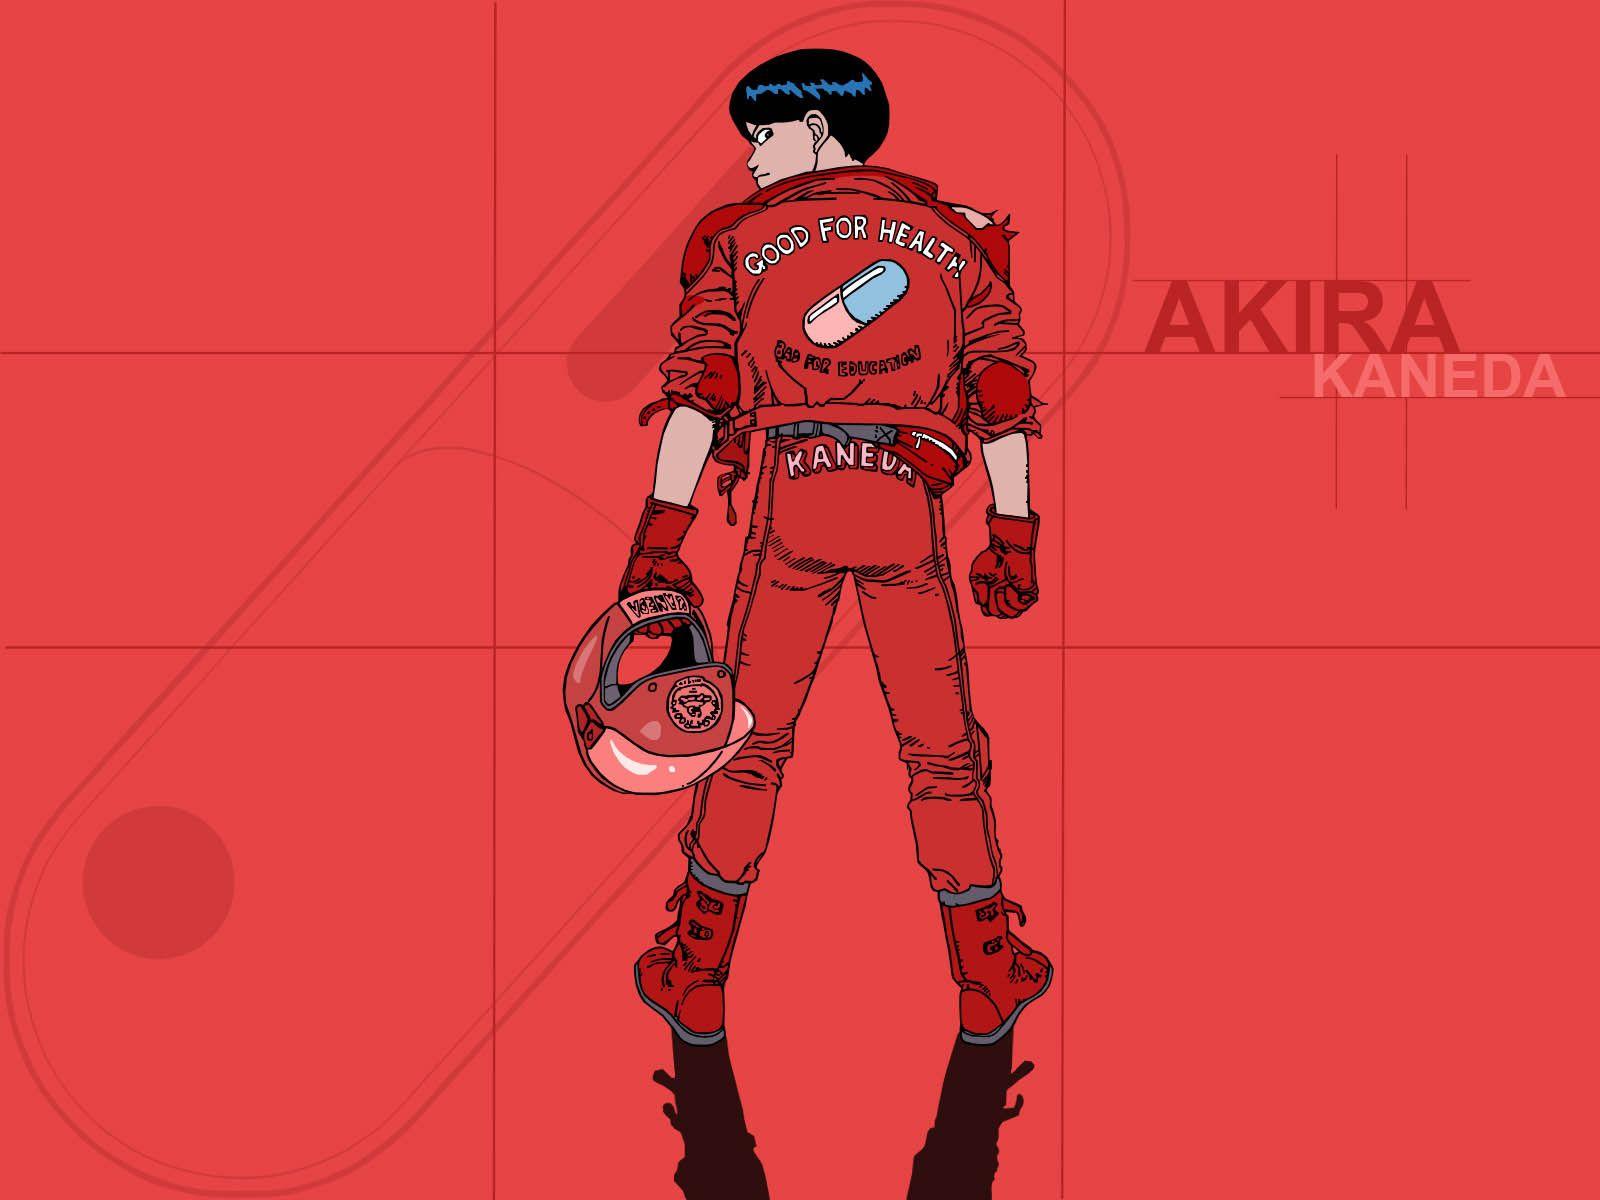 Akira Desktop Wallpapers Top Free Akira Desktop Backgrounds Wallpaperaccess